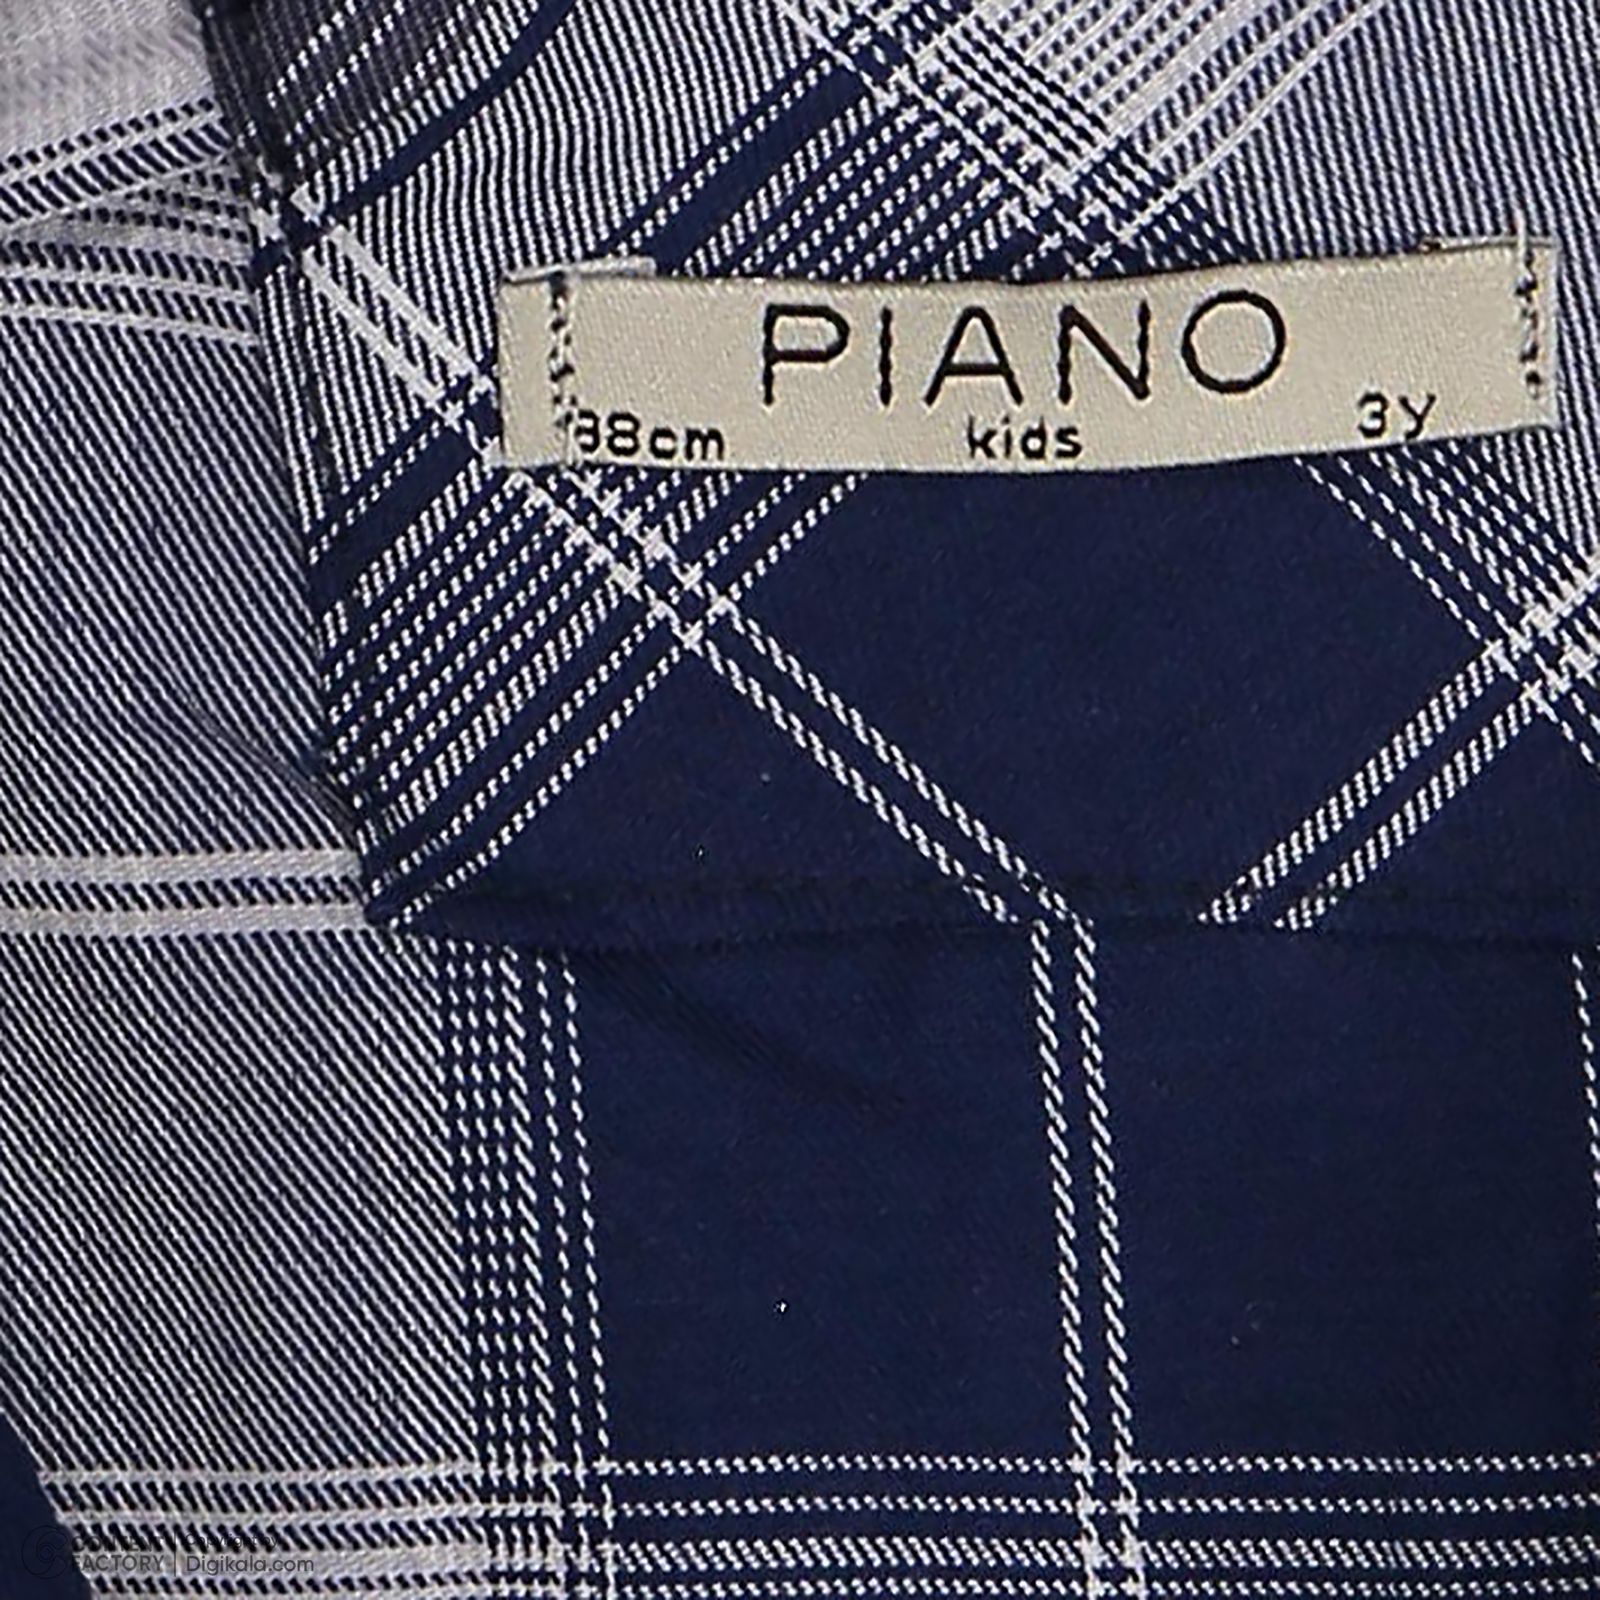 پیراهن پسرانه پیانو مدل 1171 رنگ آبی -  - 5